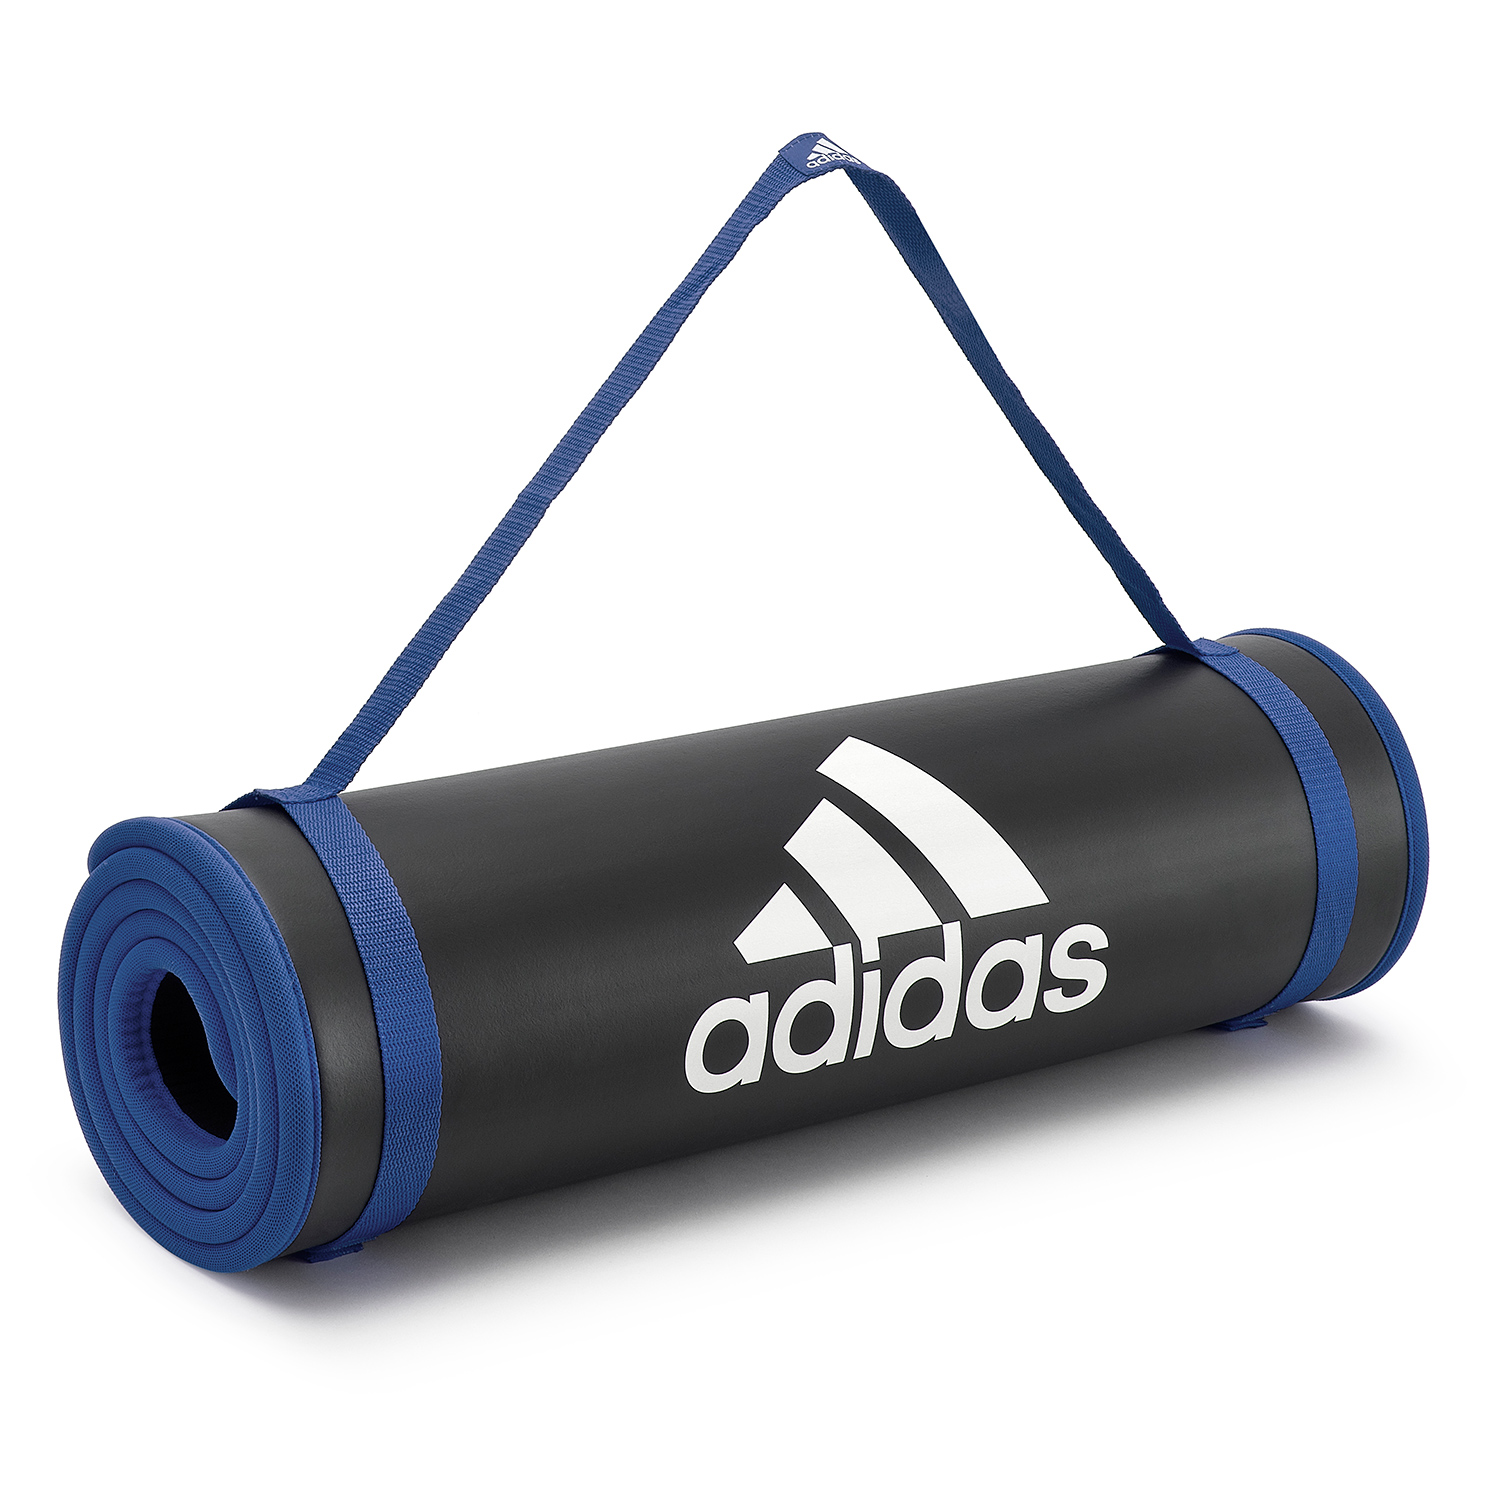 Adidas Kern Training Matte blau 10 m